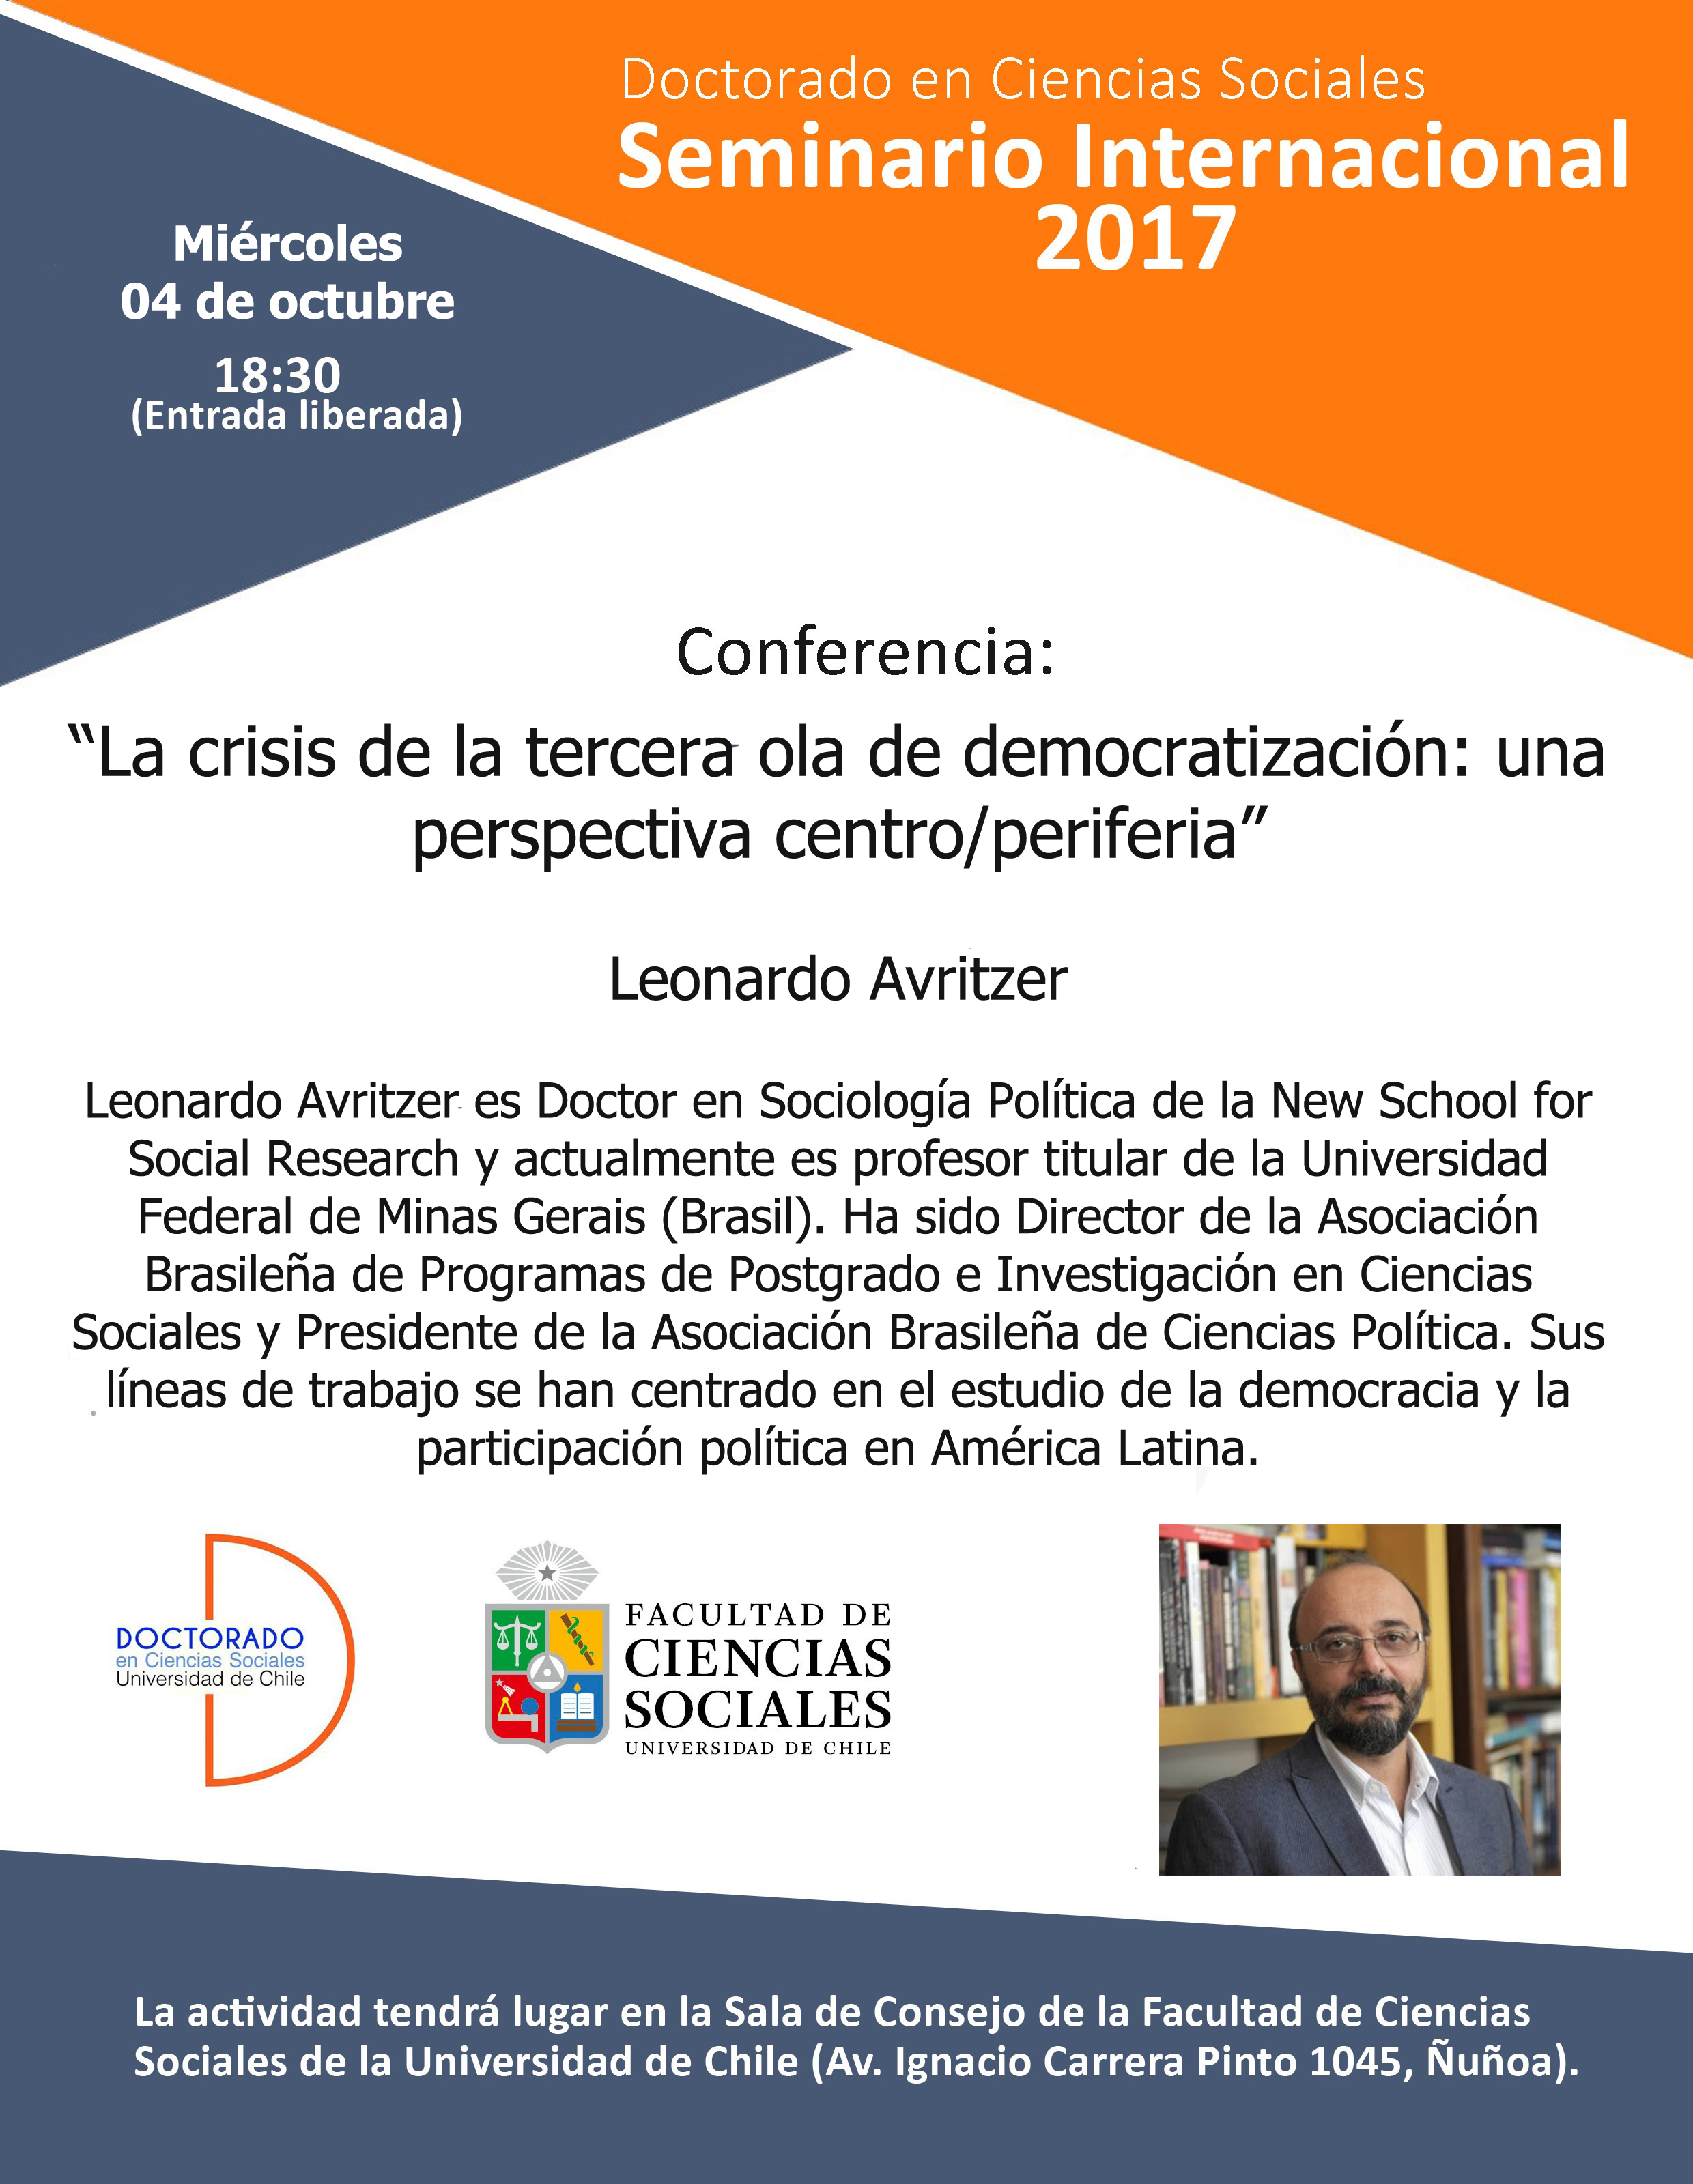 Sexta sesión Seminario Internacional 2017: Leonardo Avritzer